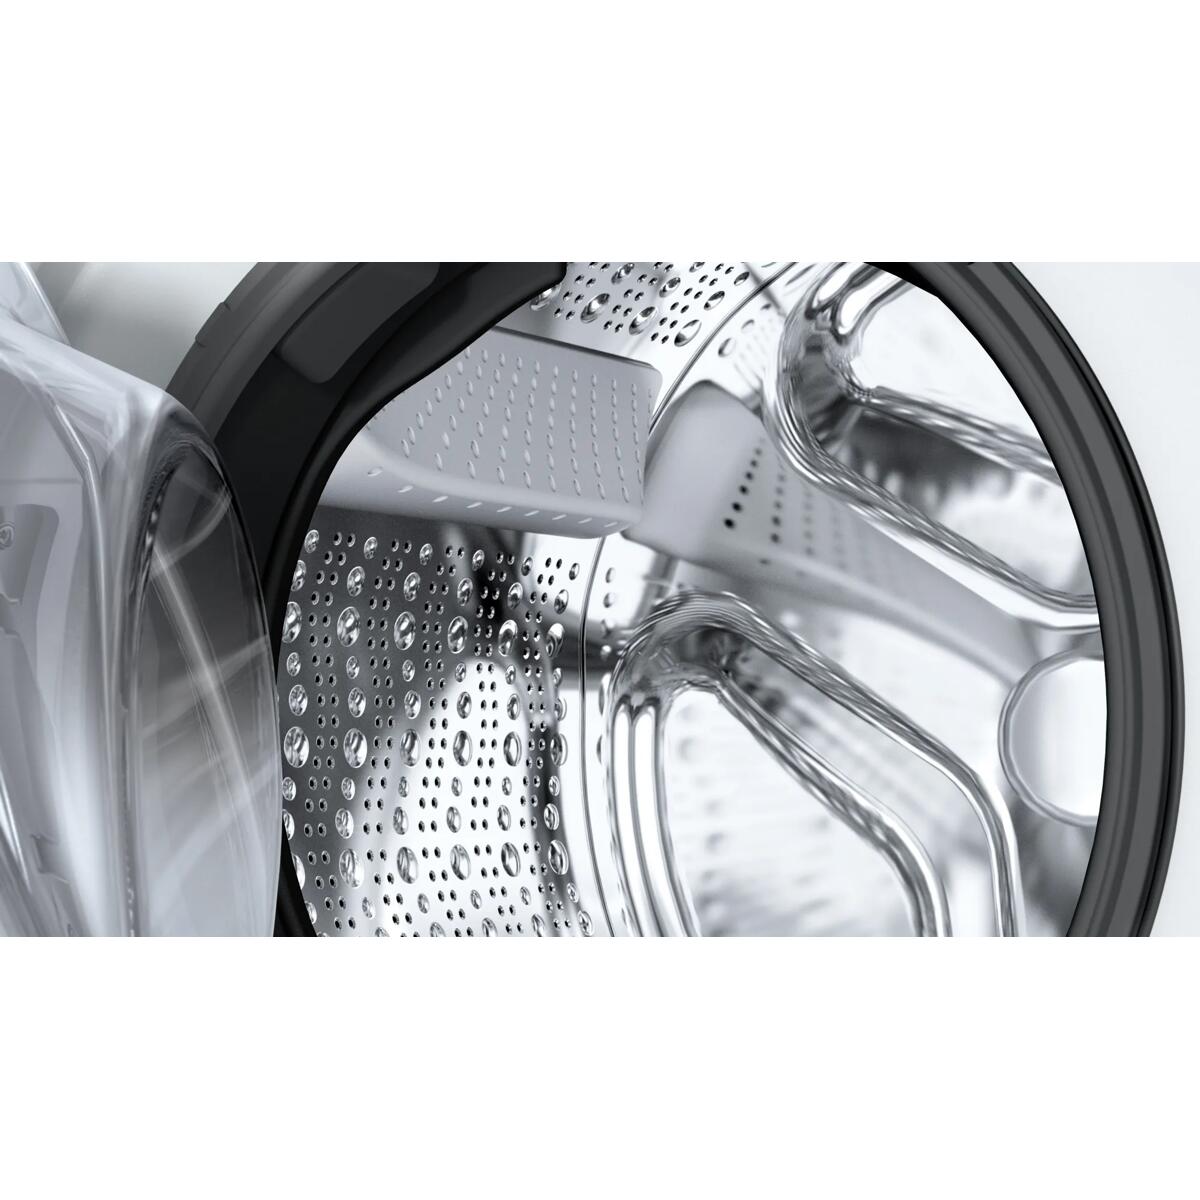 Bosch 1400 Elektroshop Waschmaschine, Display, Assist, weiß 60cm WGB246070 U/min., LED Iron Wagner breit, Home kg 9 Serie Connect, 8 Frontlader